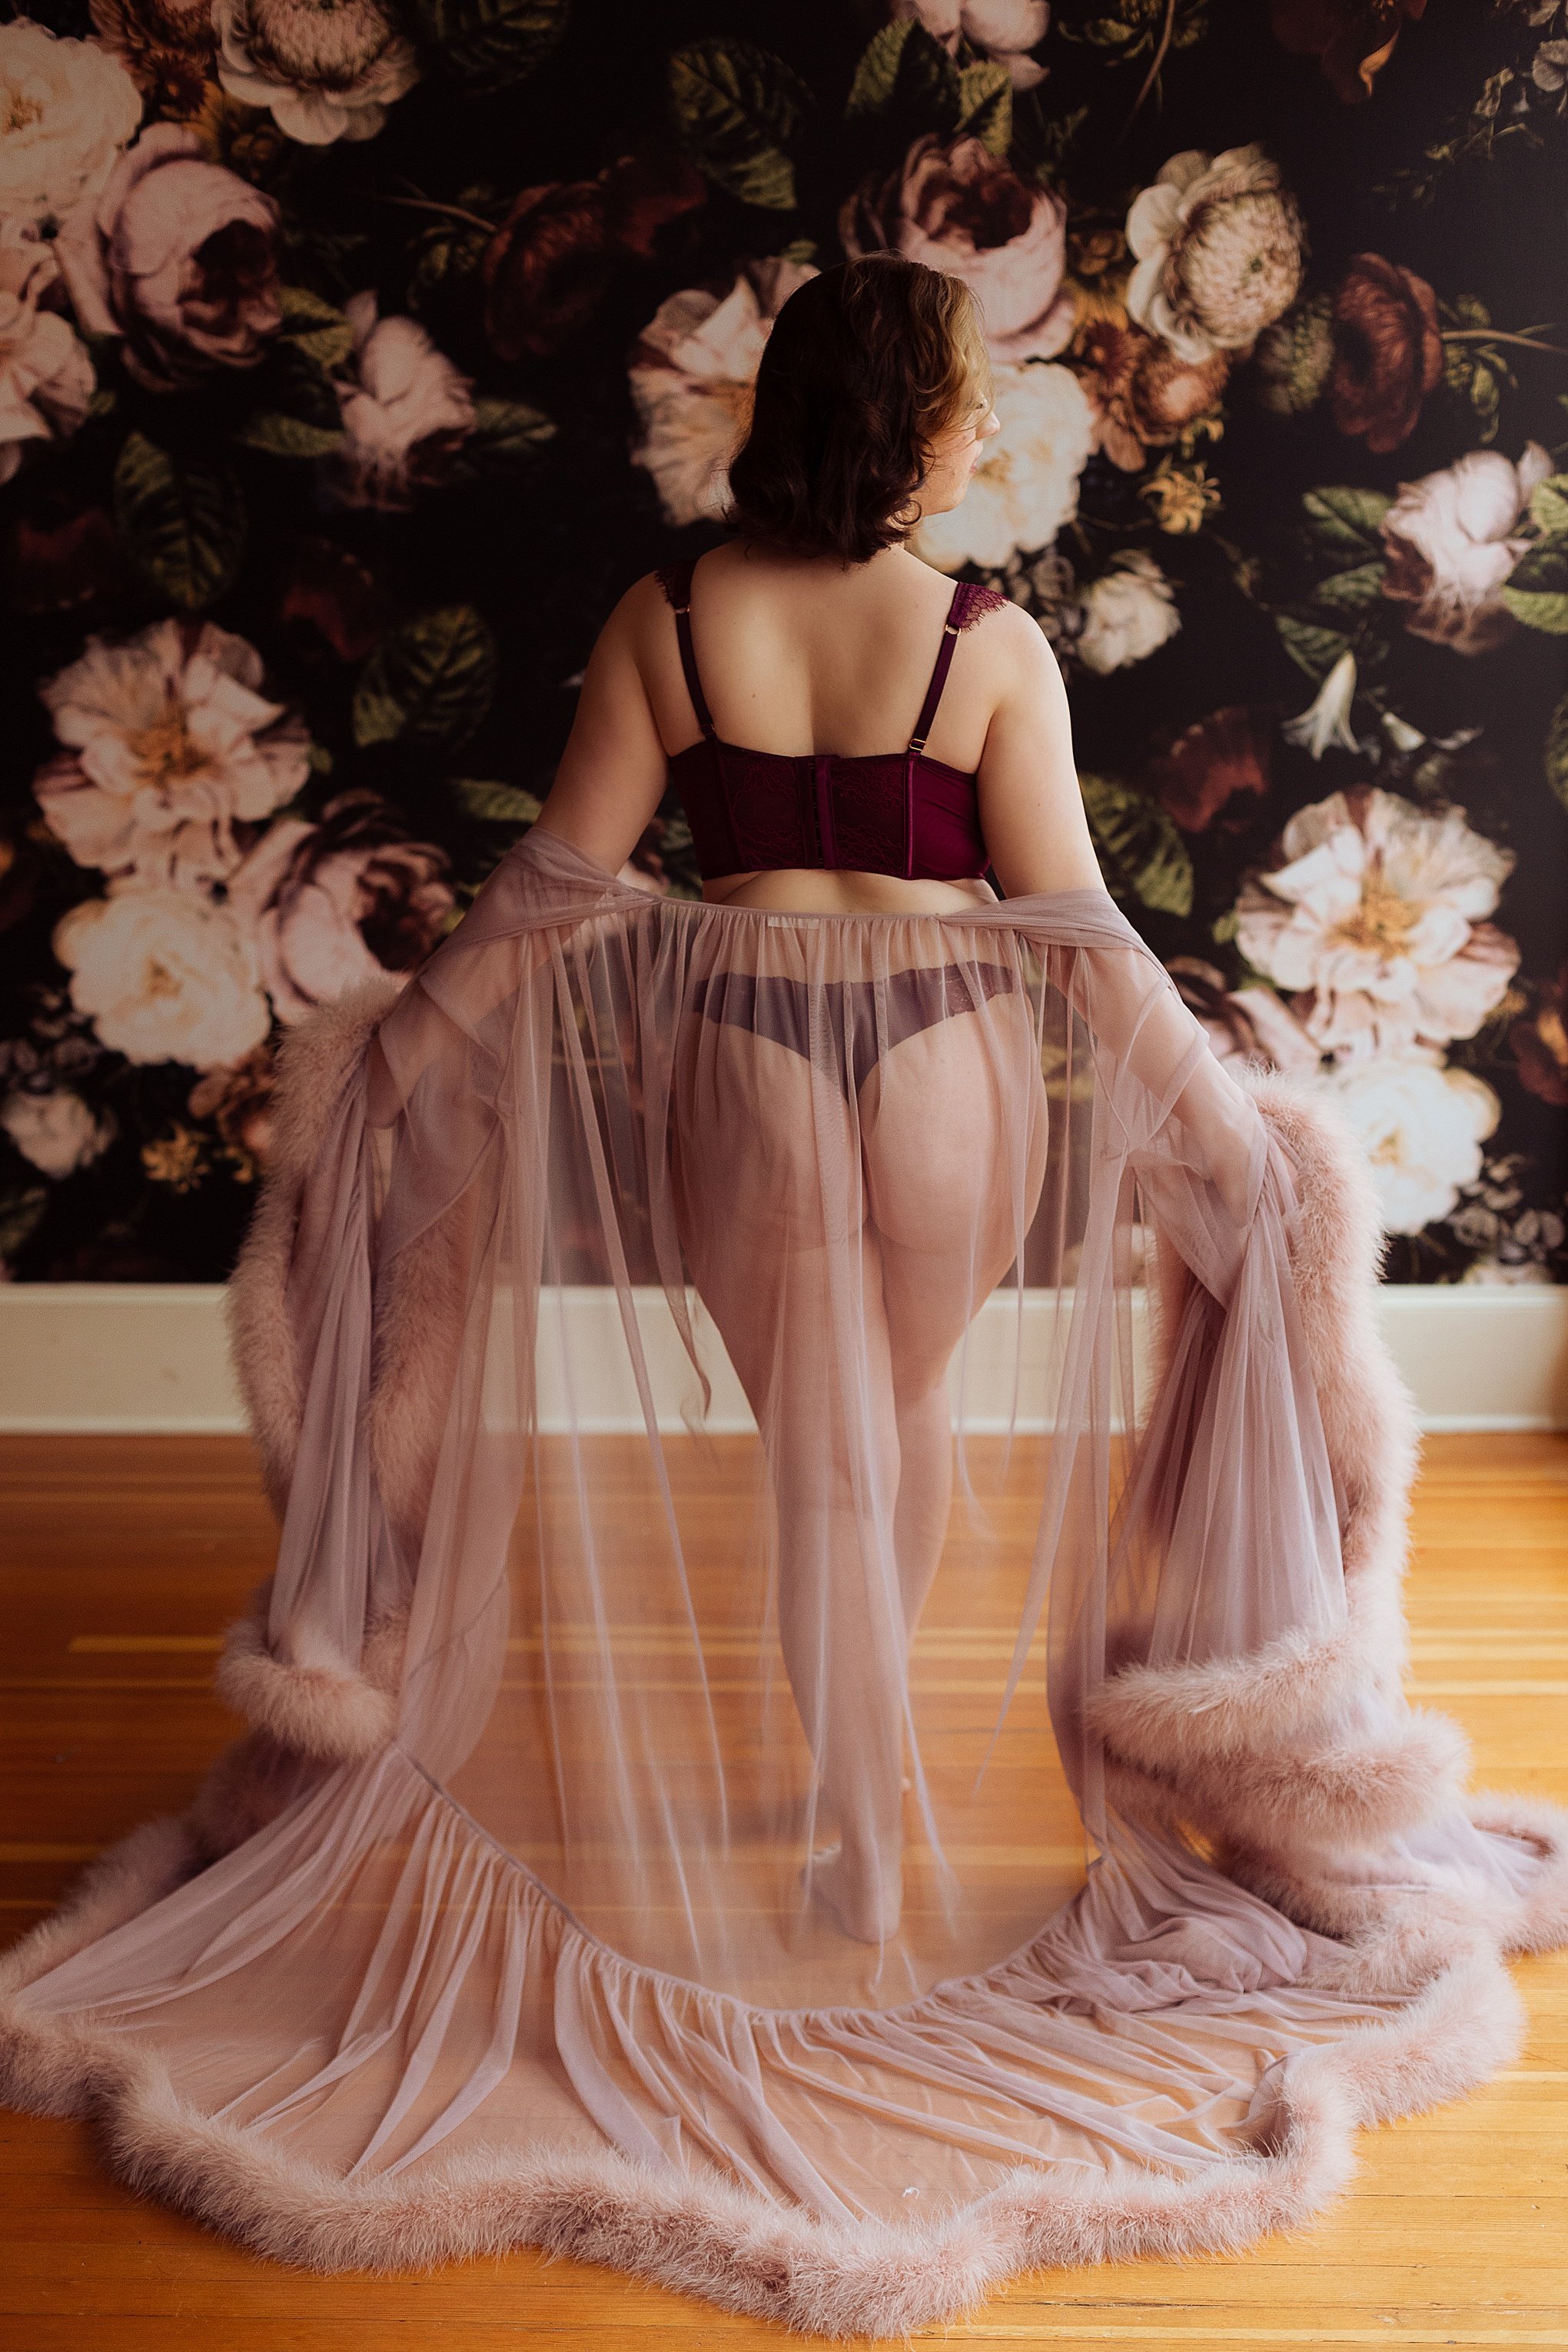 burlesque-inspired-boudoir-photos-1.jpg